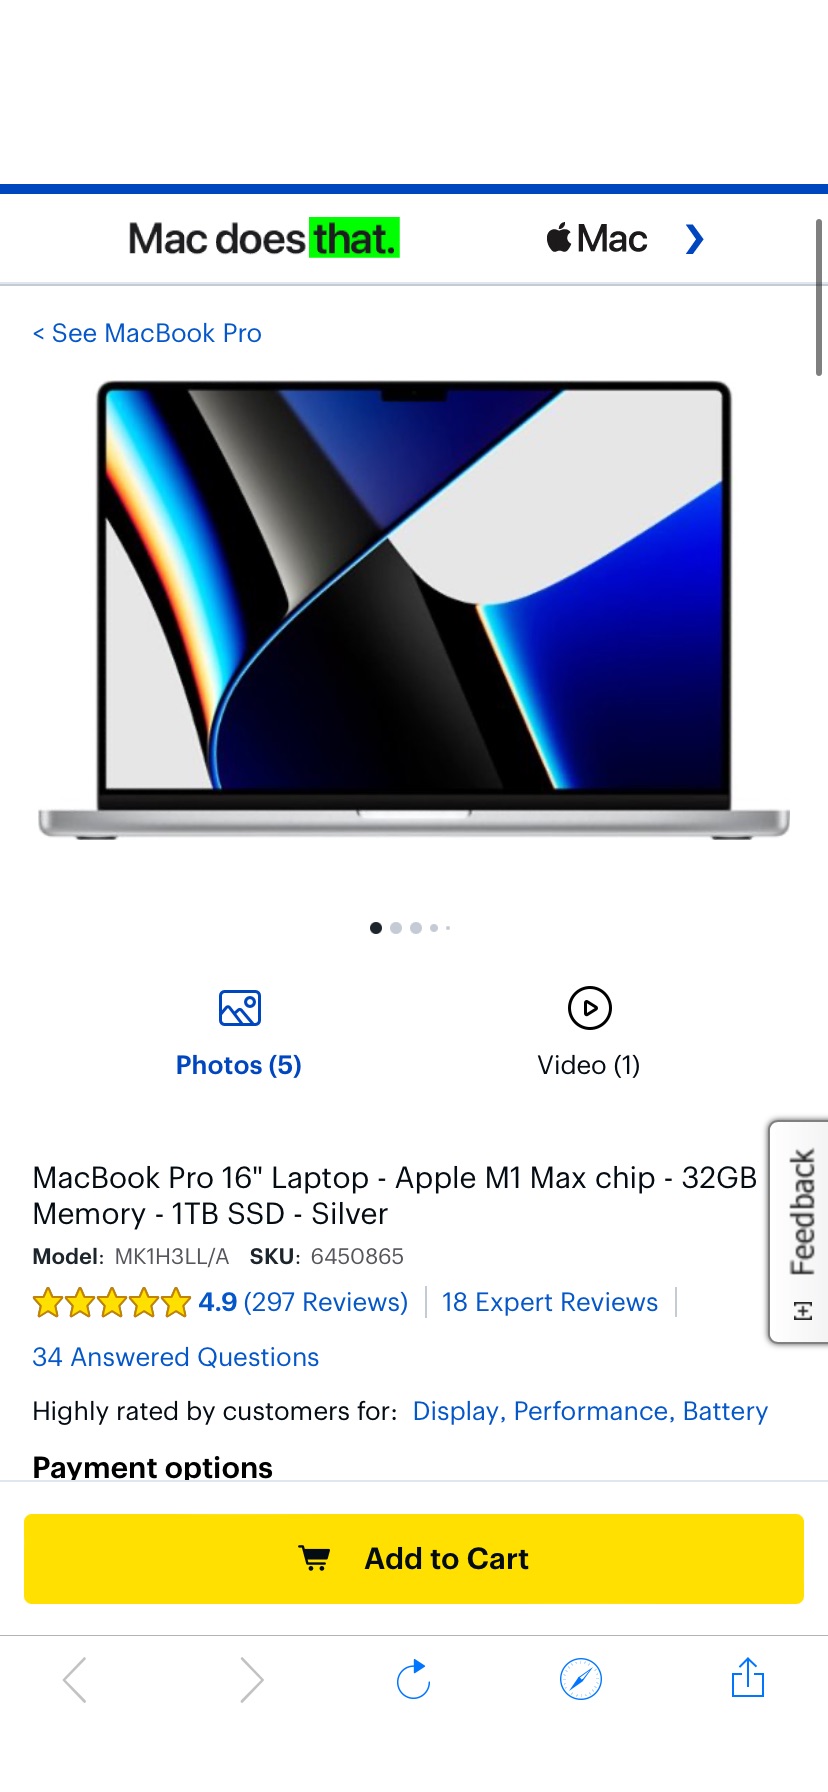 MacBook Pro 16" Laptop Apple M1 Max chip 32GB Memory 1TB SSD Silver MK1H3LL/A - Best Buy